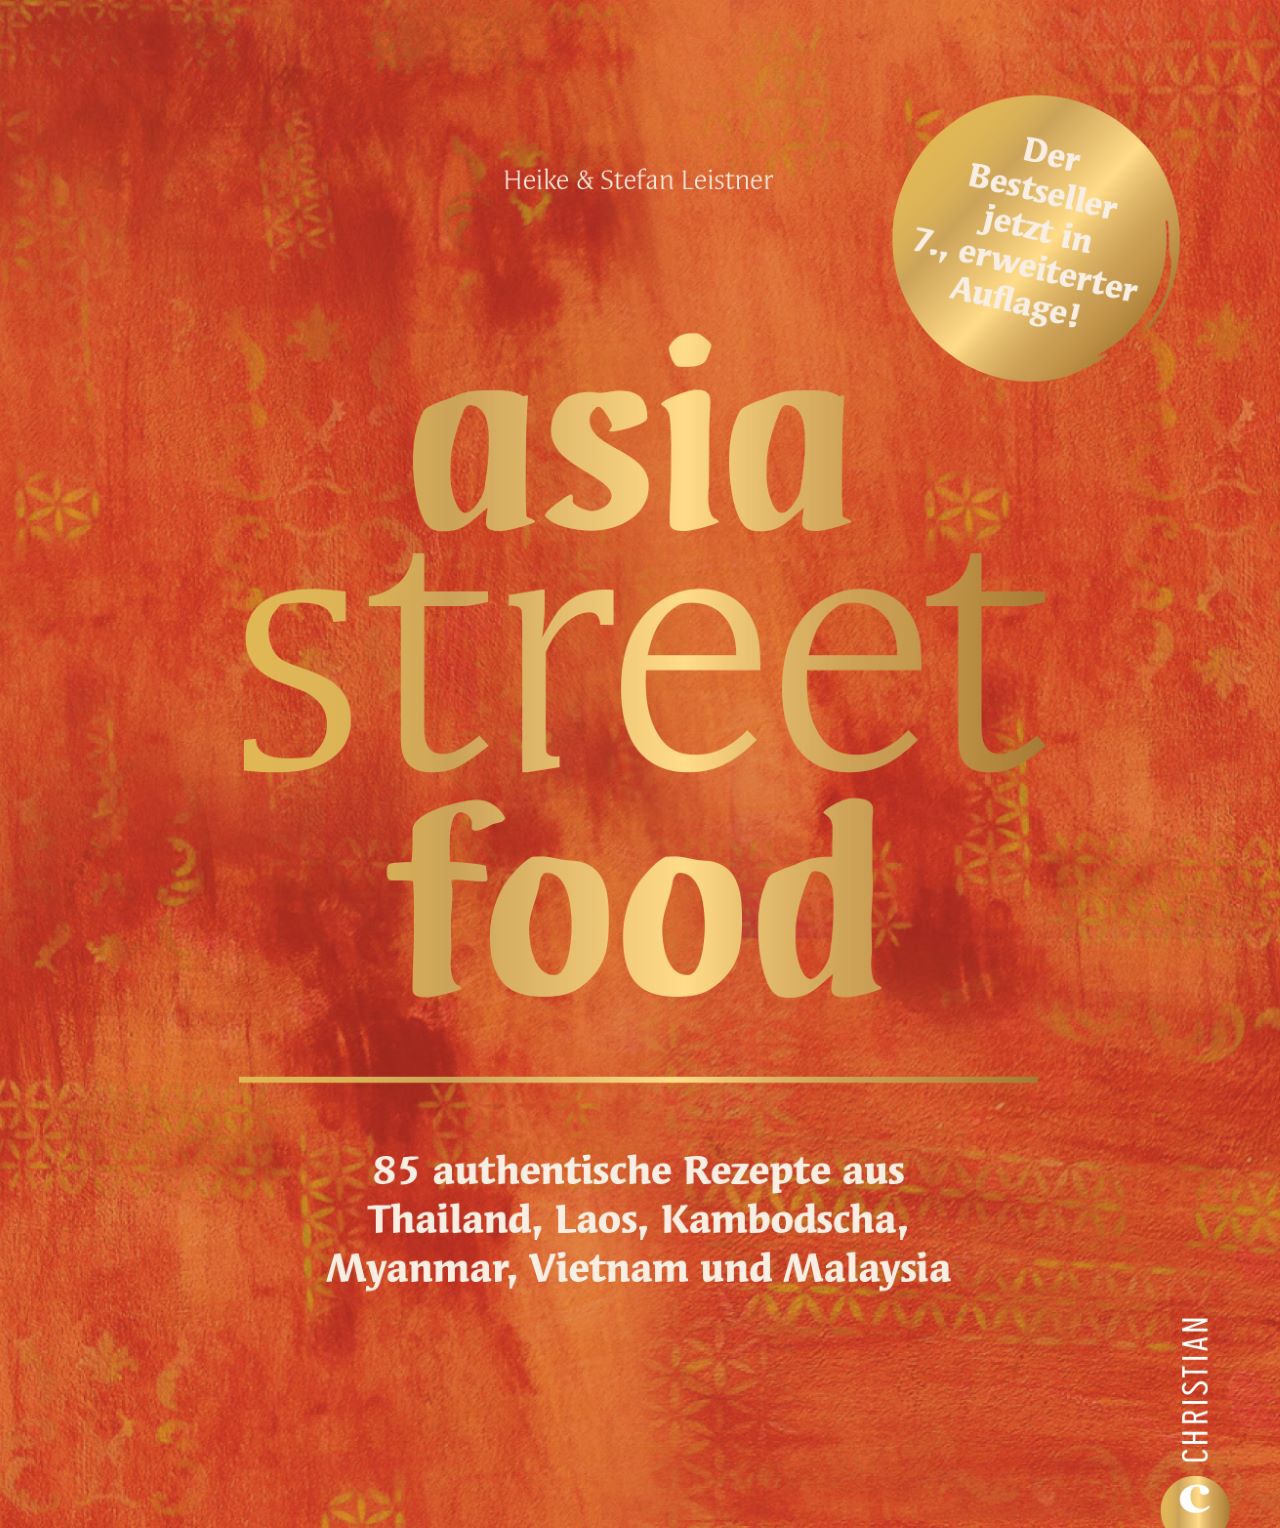 asia street food - 85 authentische Rezepte